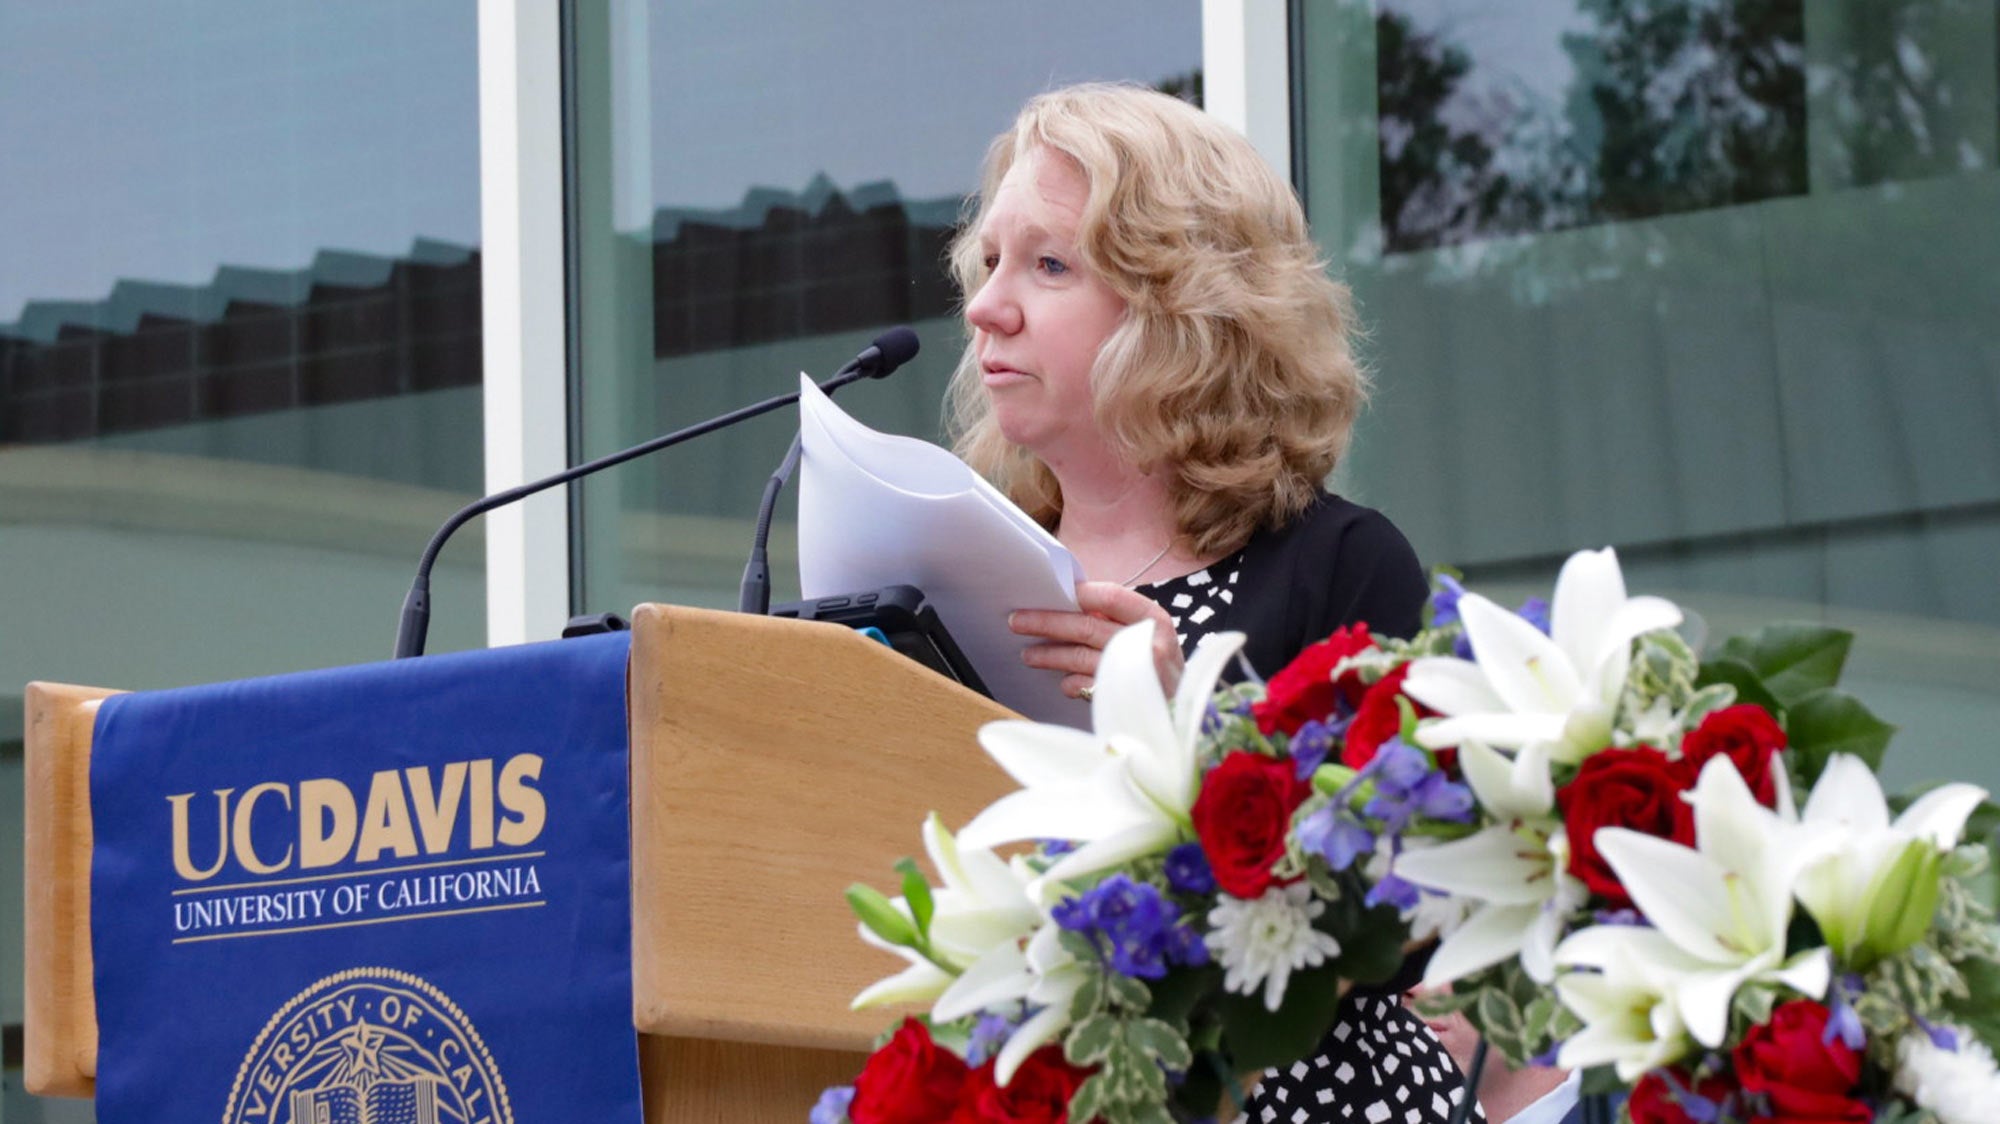 Woman speaks from UC Davis podium